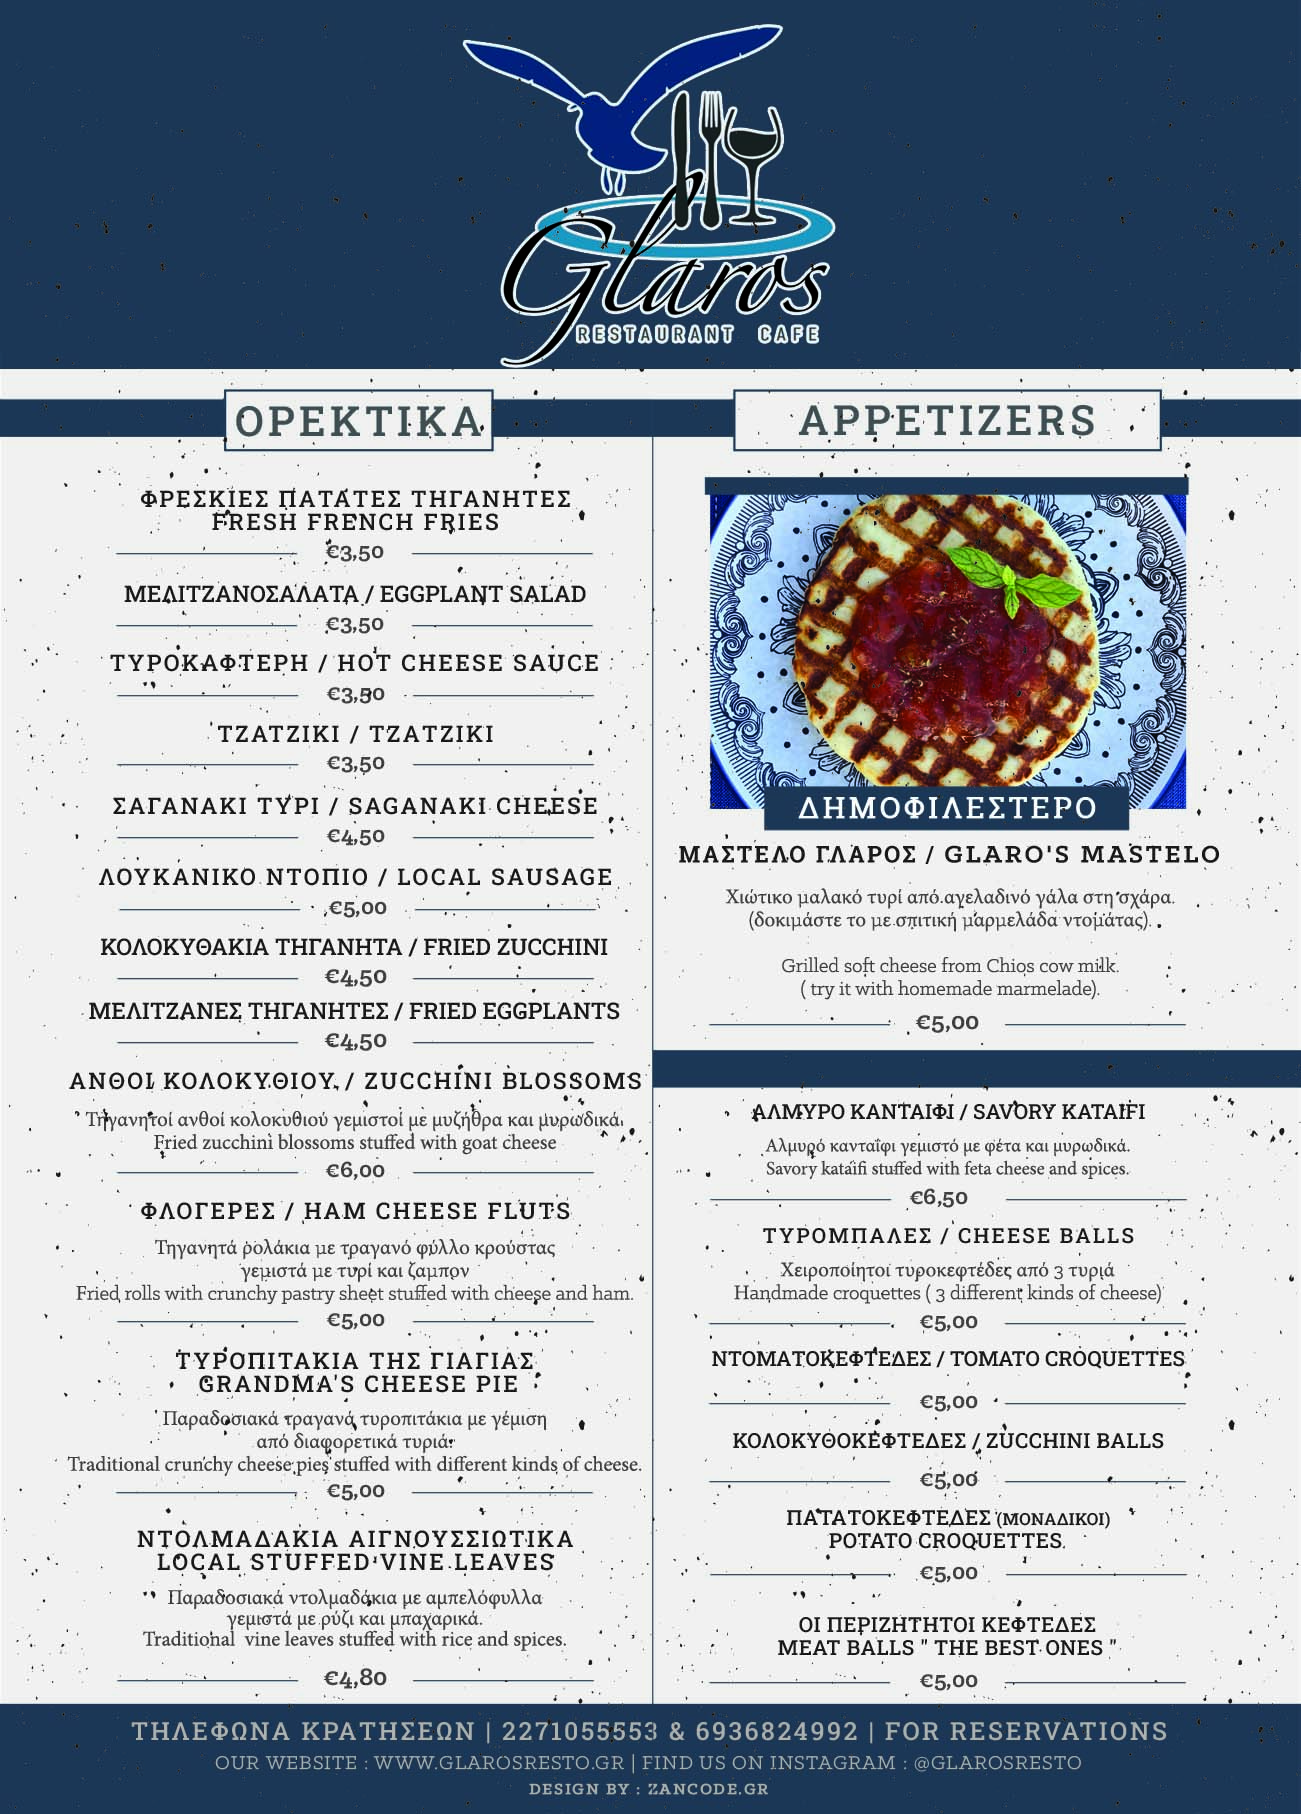 glaros-restaurant-menu-appetizers